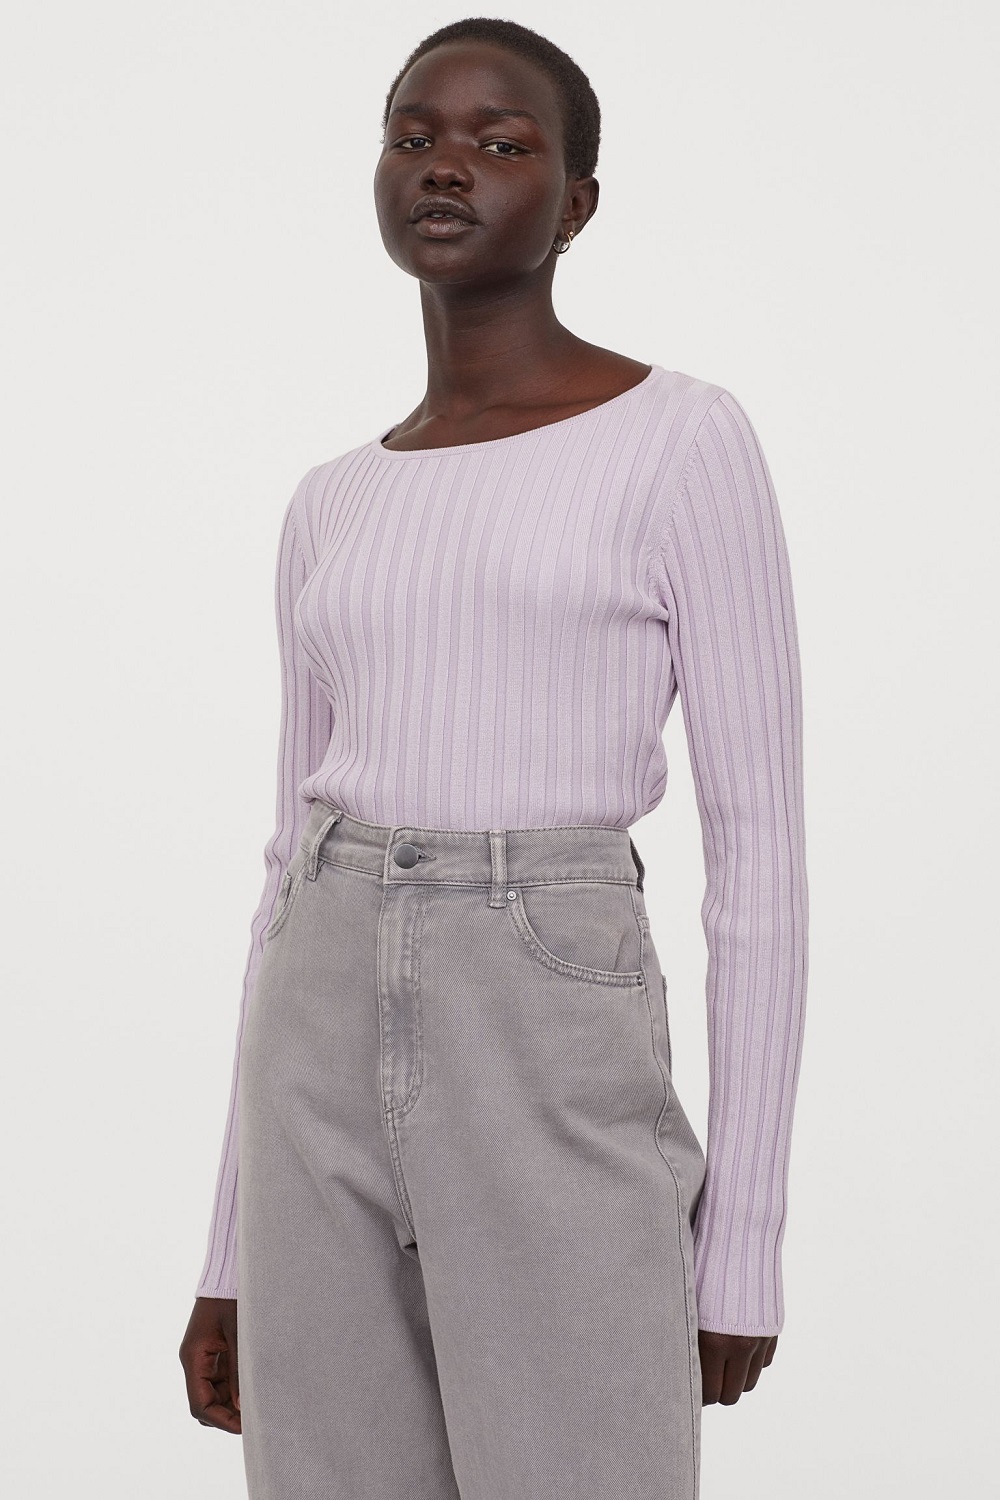 H&M pulover s otvorenim leđima jesen 2020.ver s otvorenim leđima jesen 2020. 3